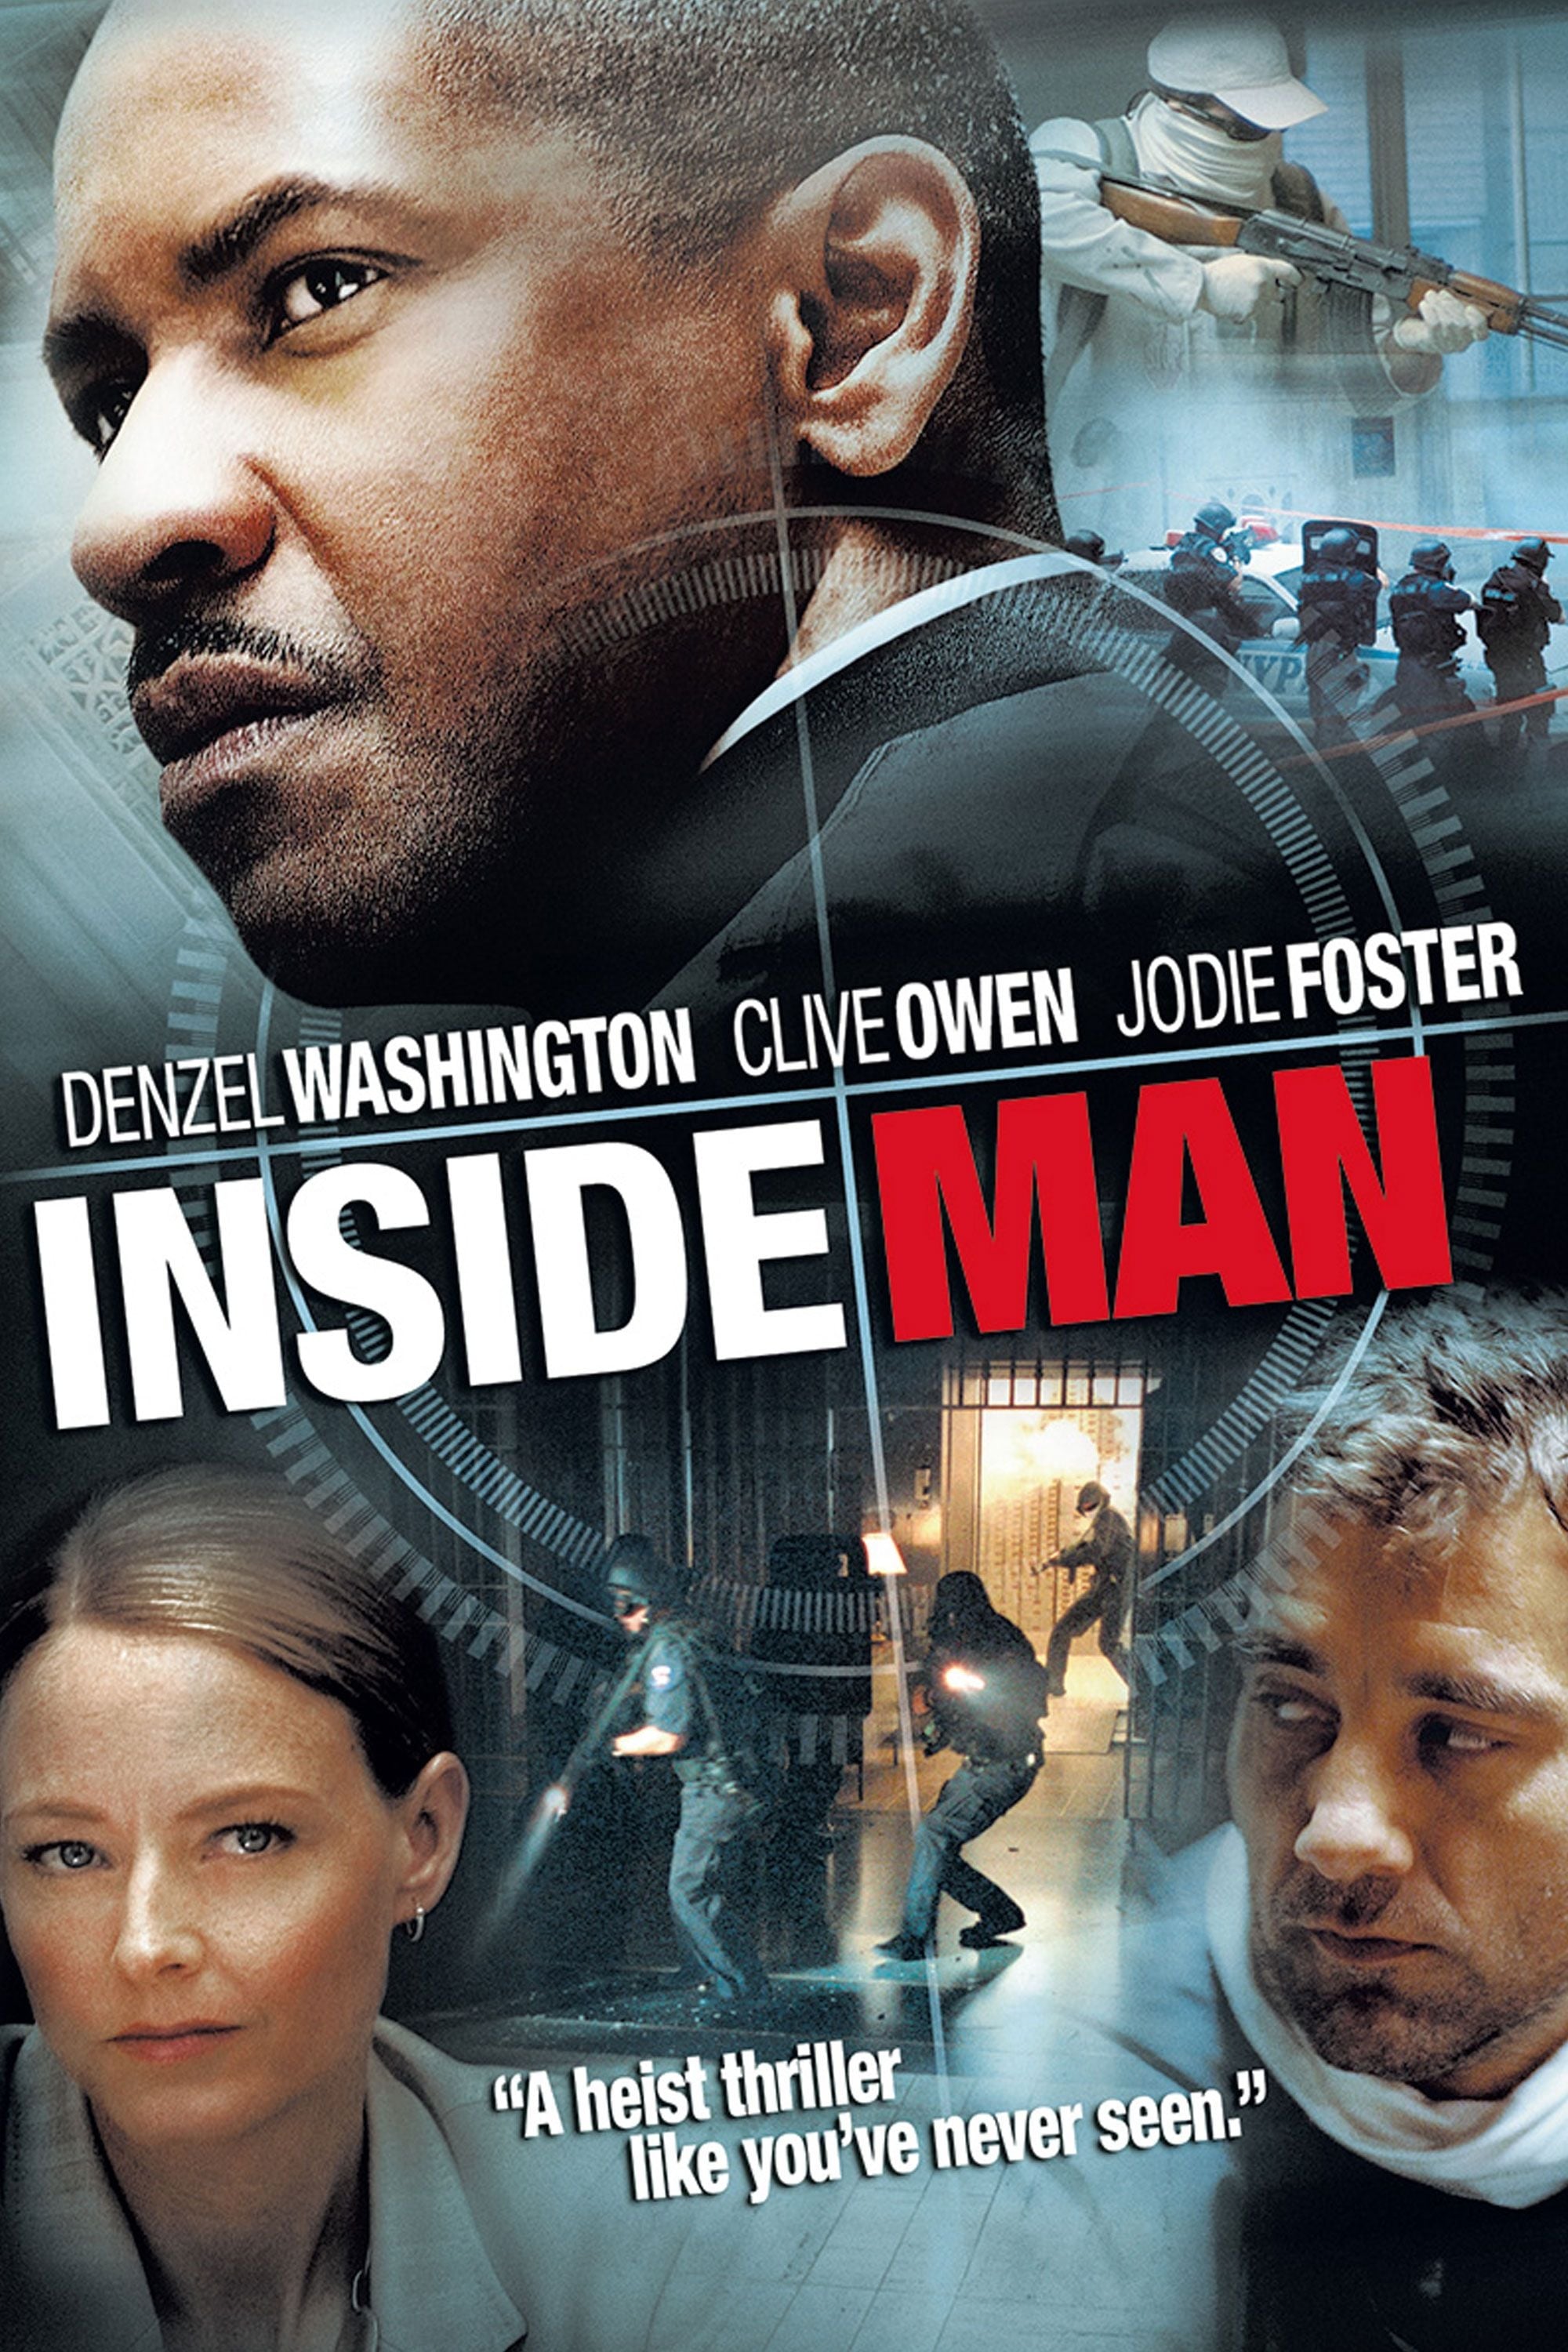 EN - Inside Man (2006) DENZEL WASHINGTON